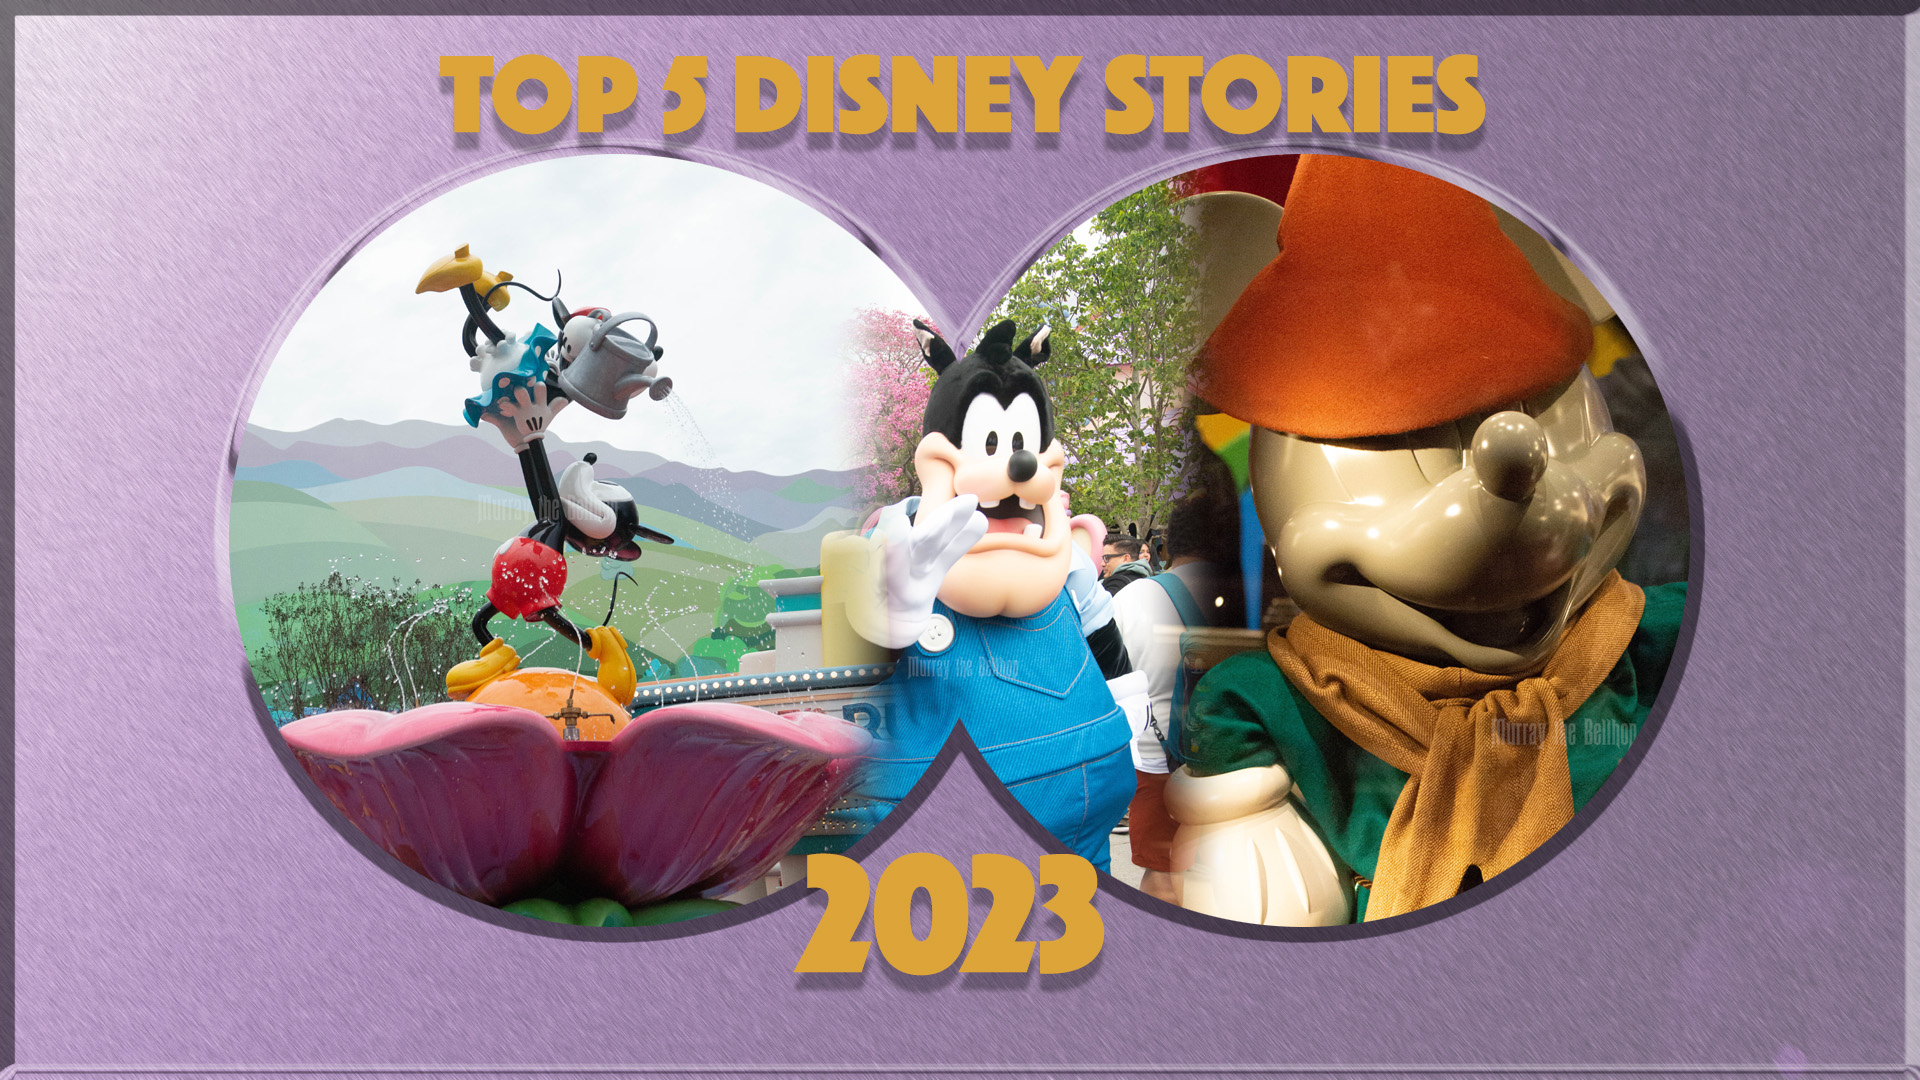 Top 5 Disney Stories of 2023: #4 Mickey’s Toontown Reopens